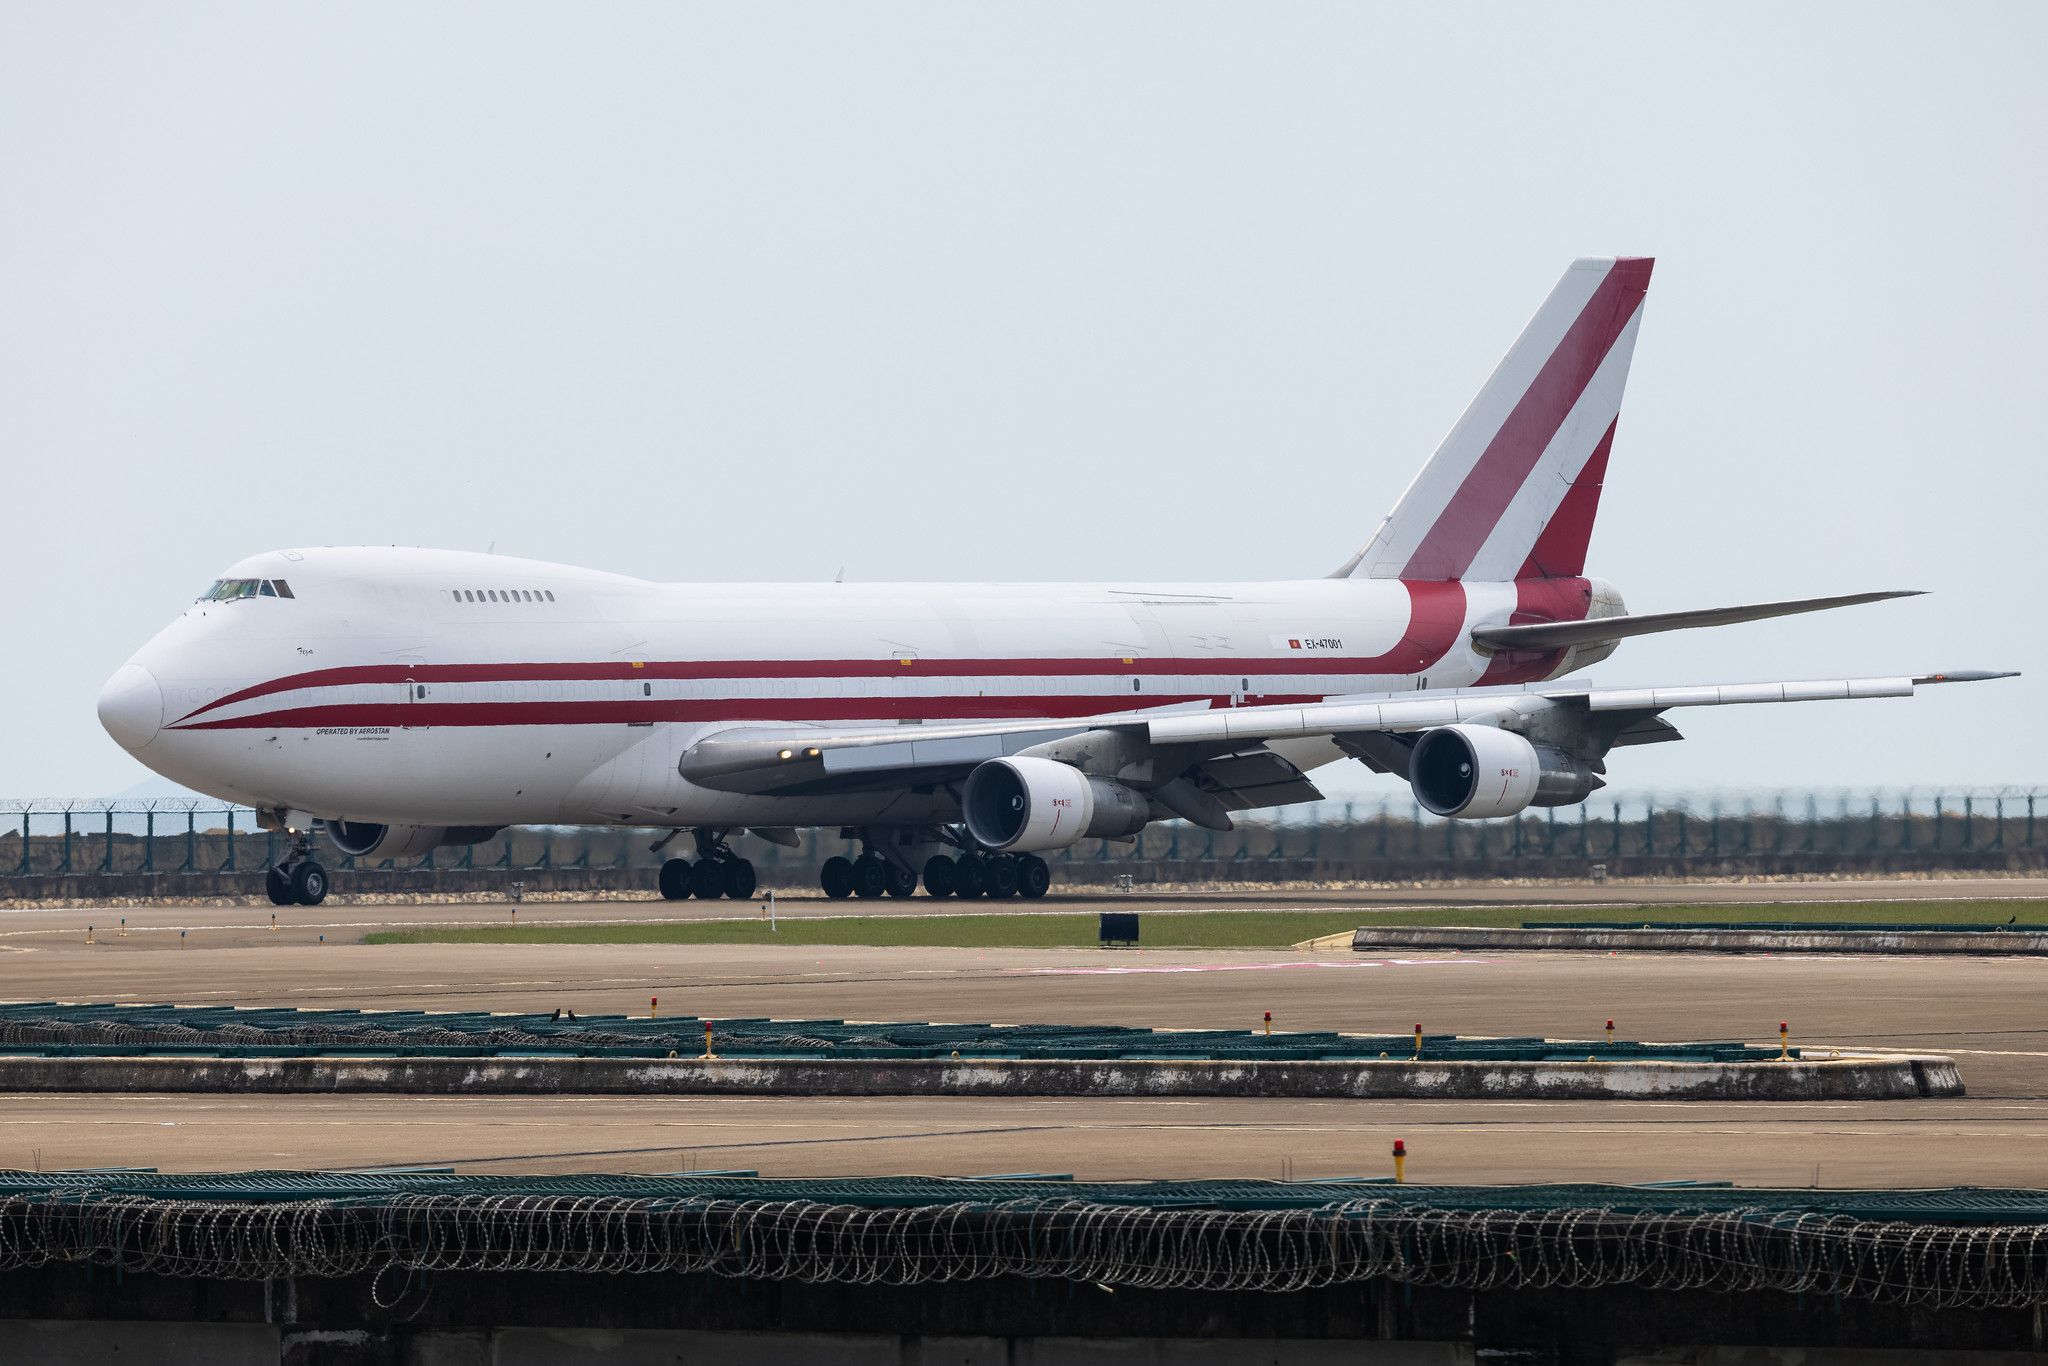 An Aerostan Boeing 747